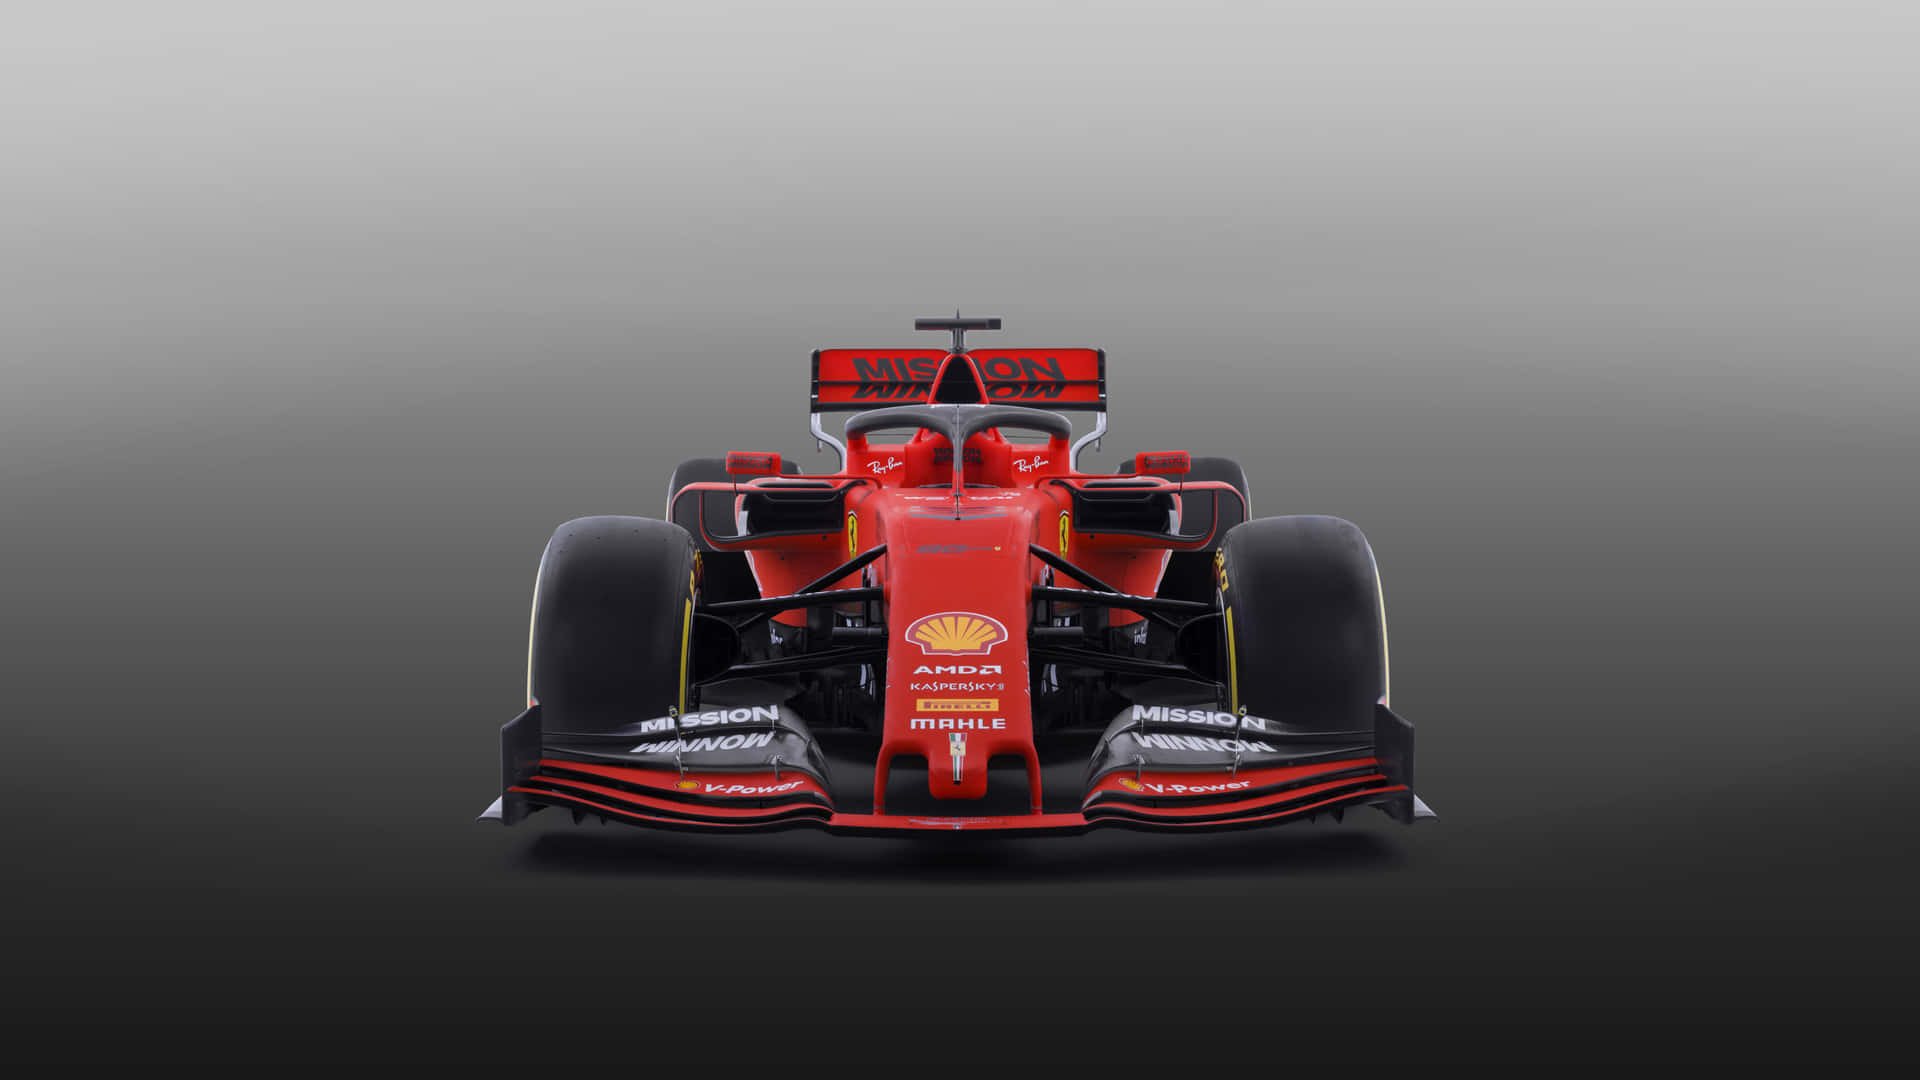 Ferrarif1-bil I Rött